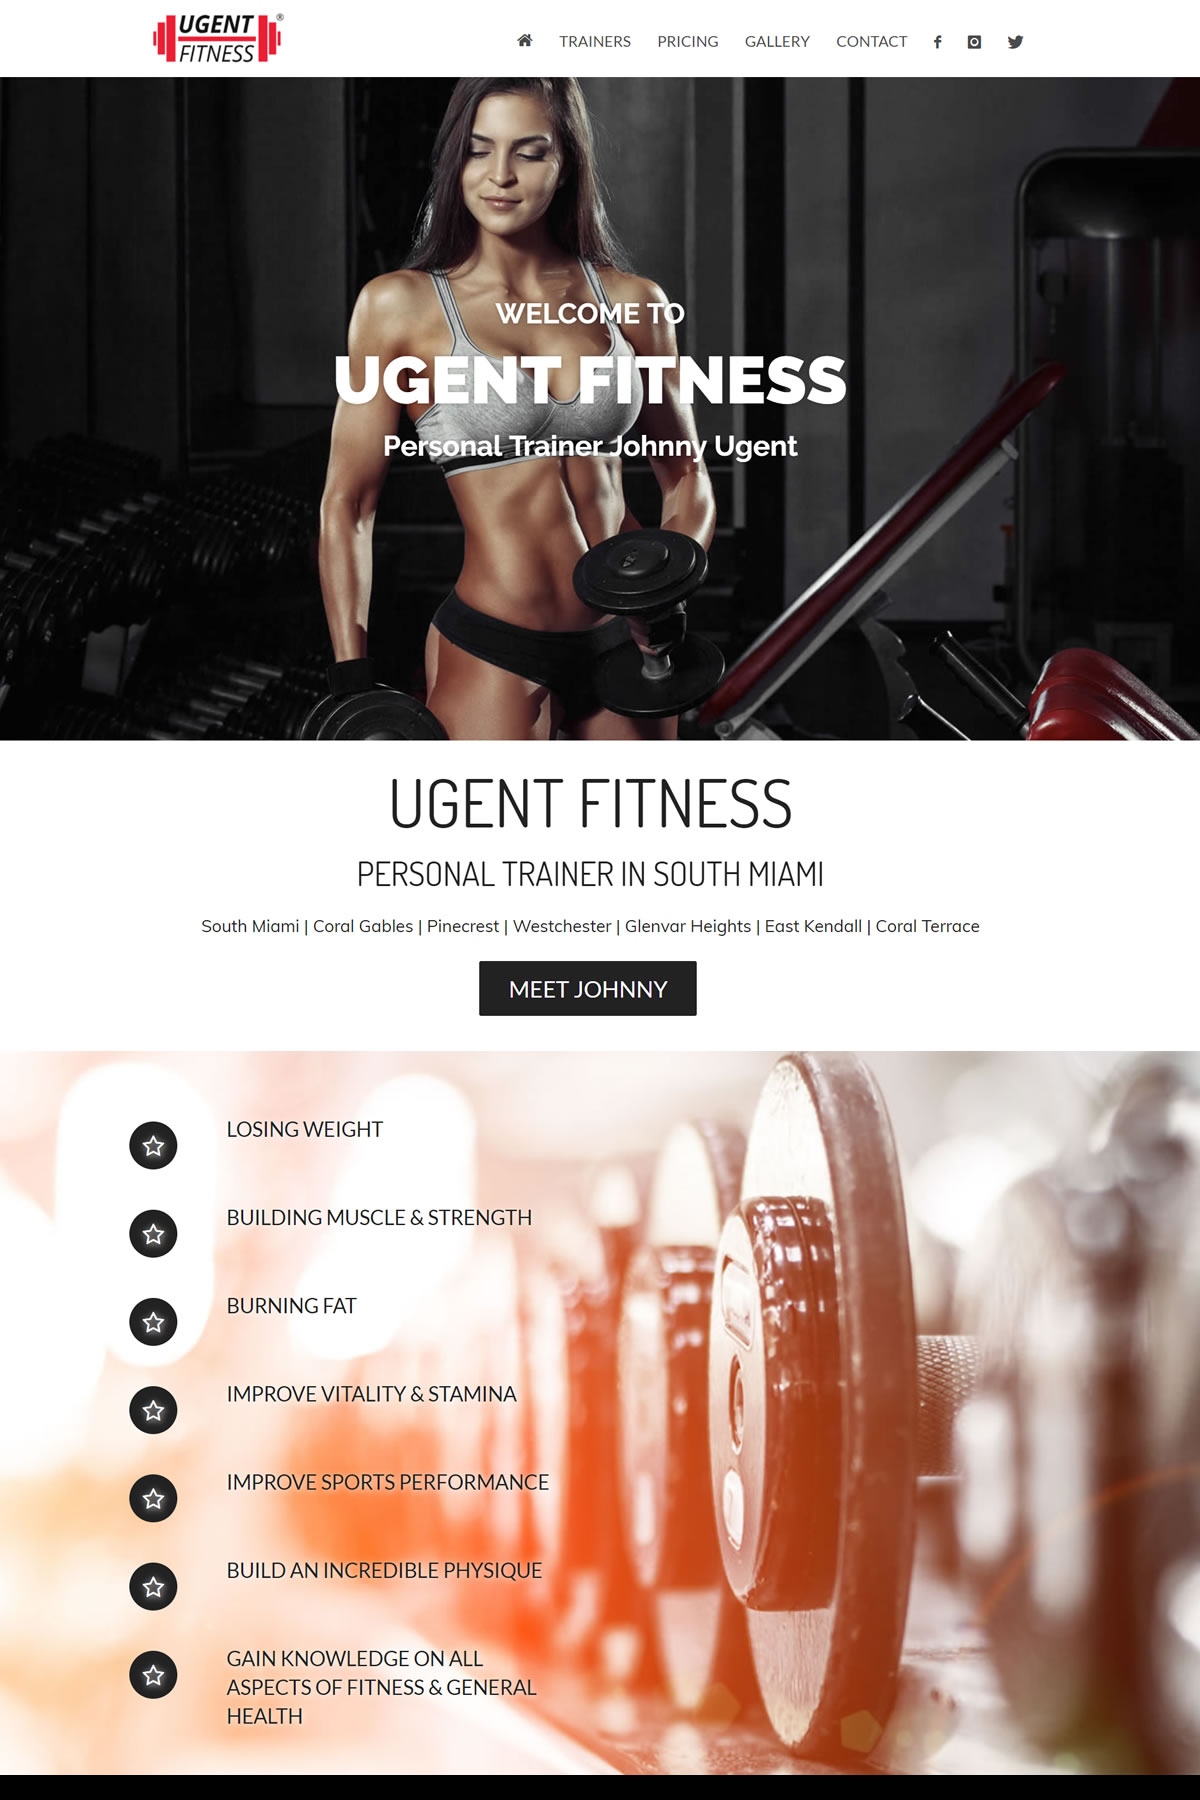 ugent-fitness-gohooper-web-design-in-miami-fl